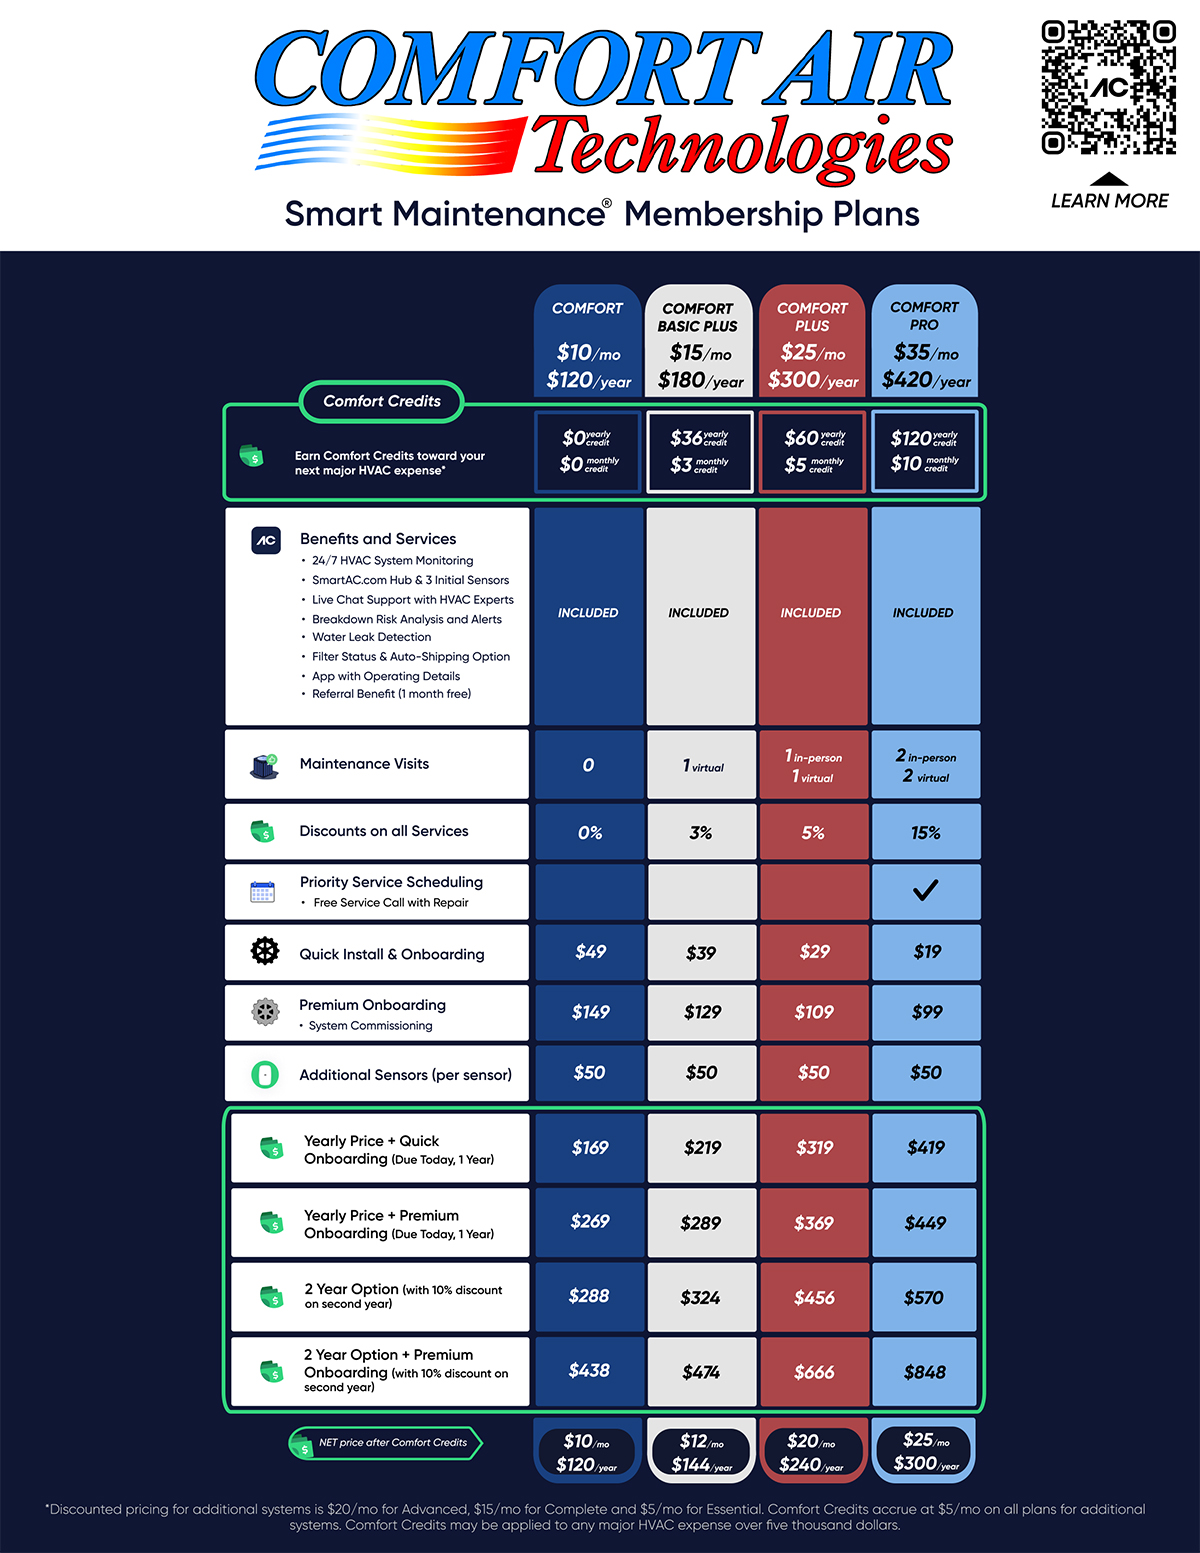 Comfort Air Technologies Smart Maintenance Membership Plans